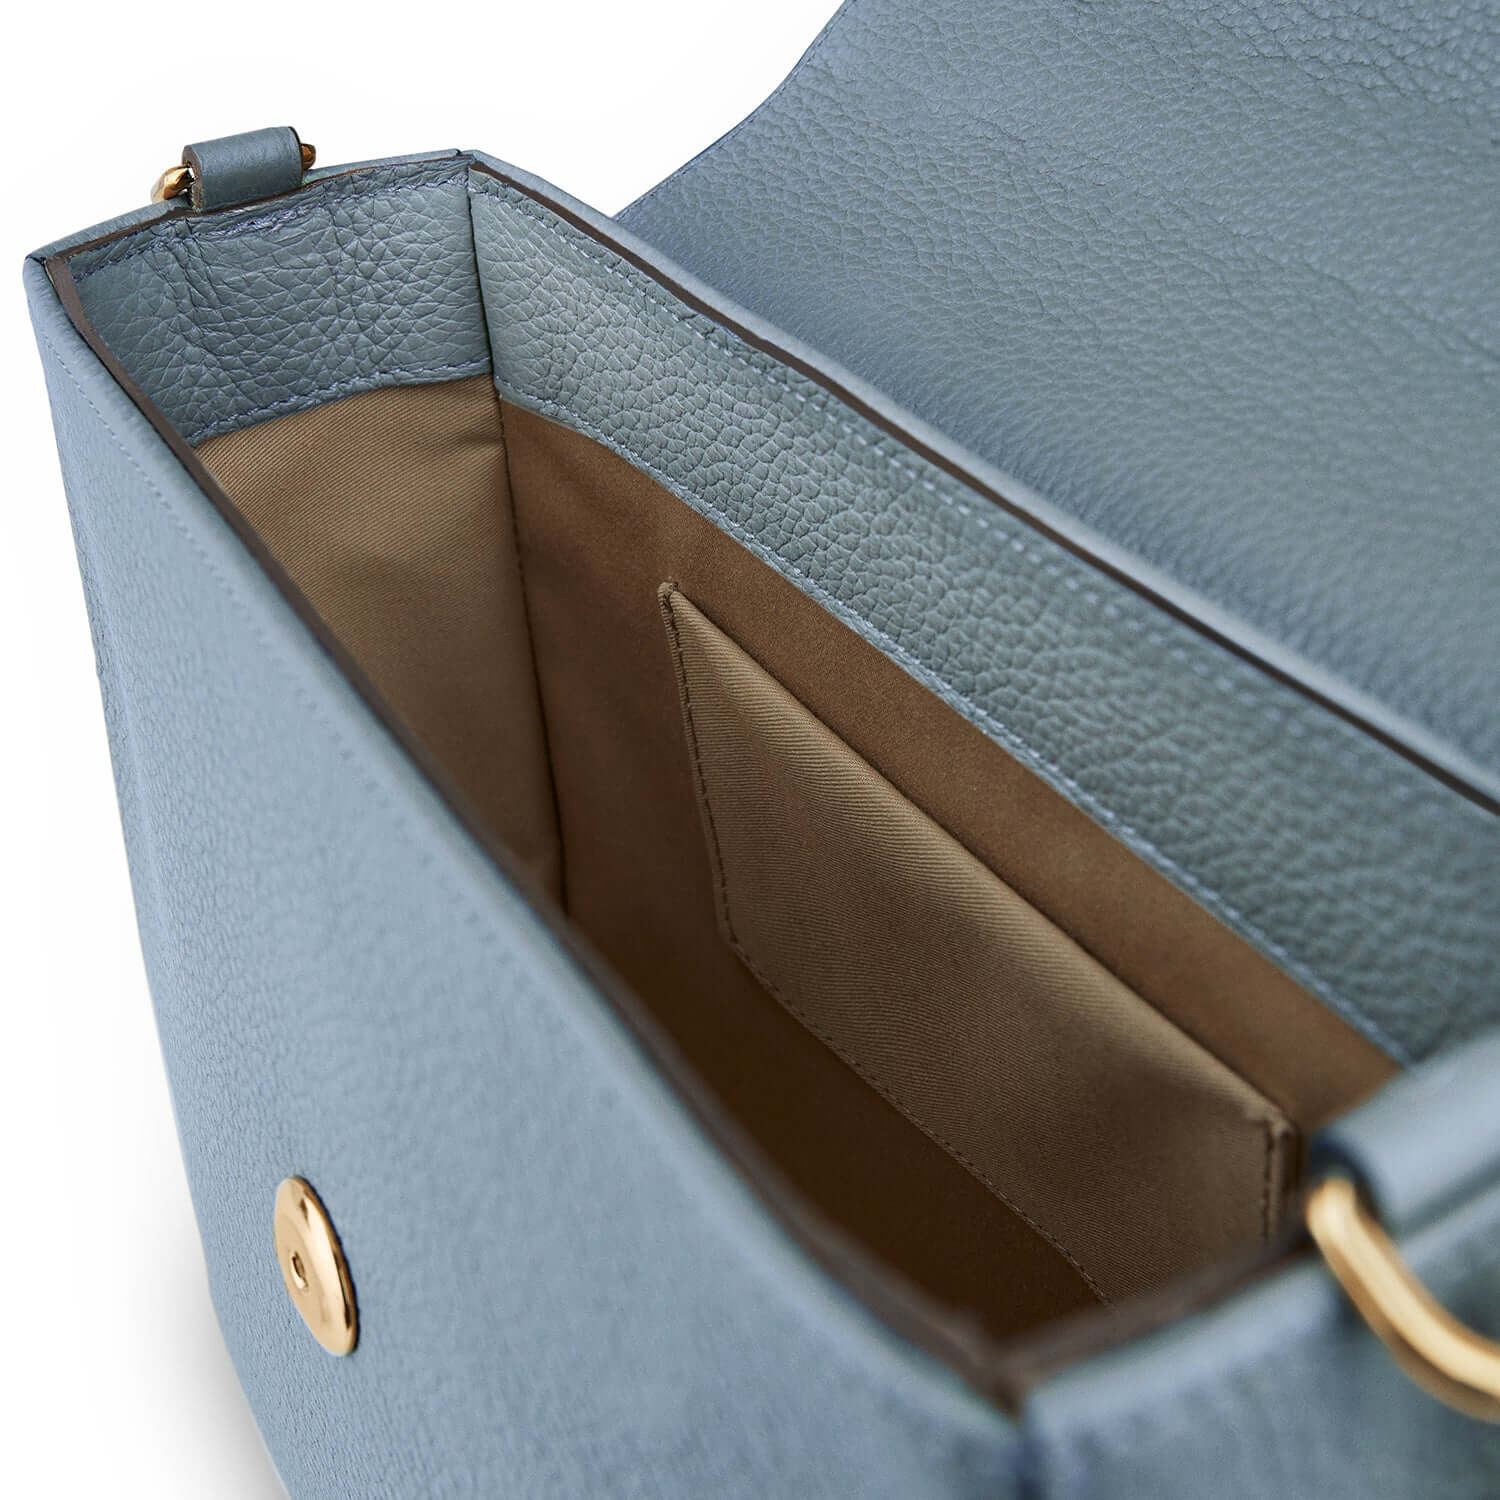 british made handbag with cotton lining and italian pebble grain leather